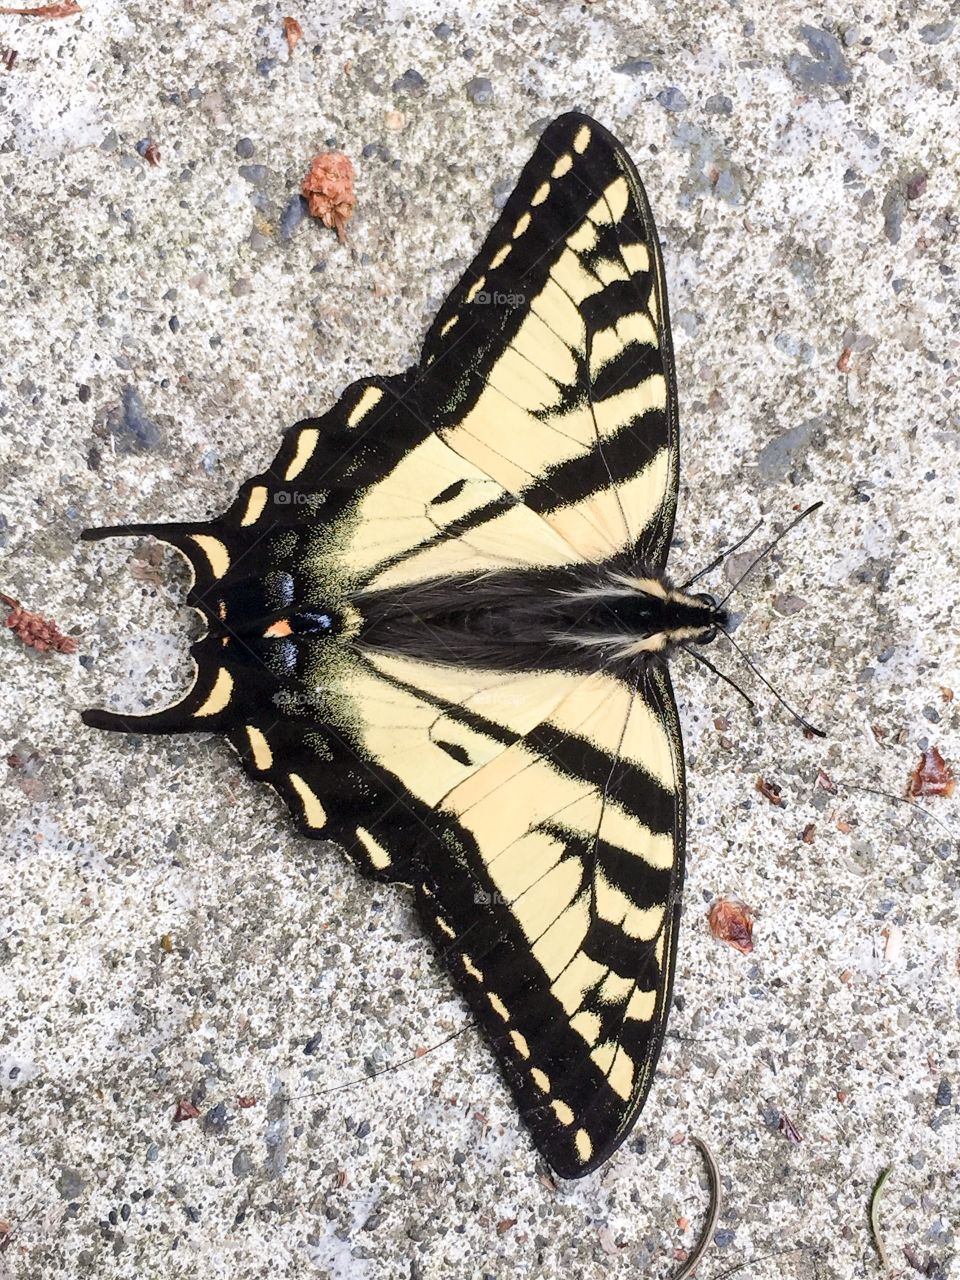 |June 2018| Tiger swallowtail. Photo taken in Olympia, WA. 